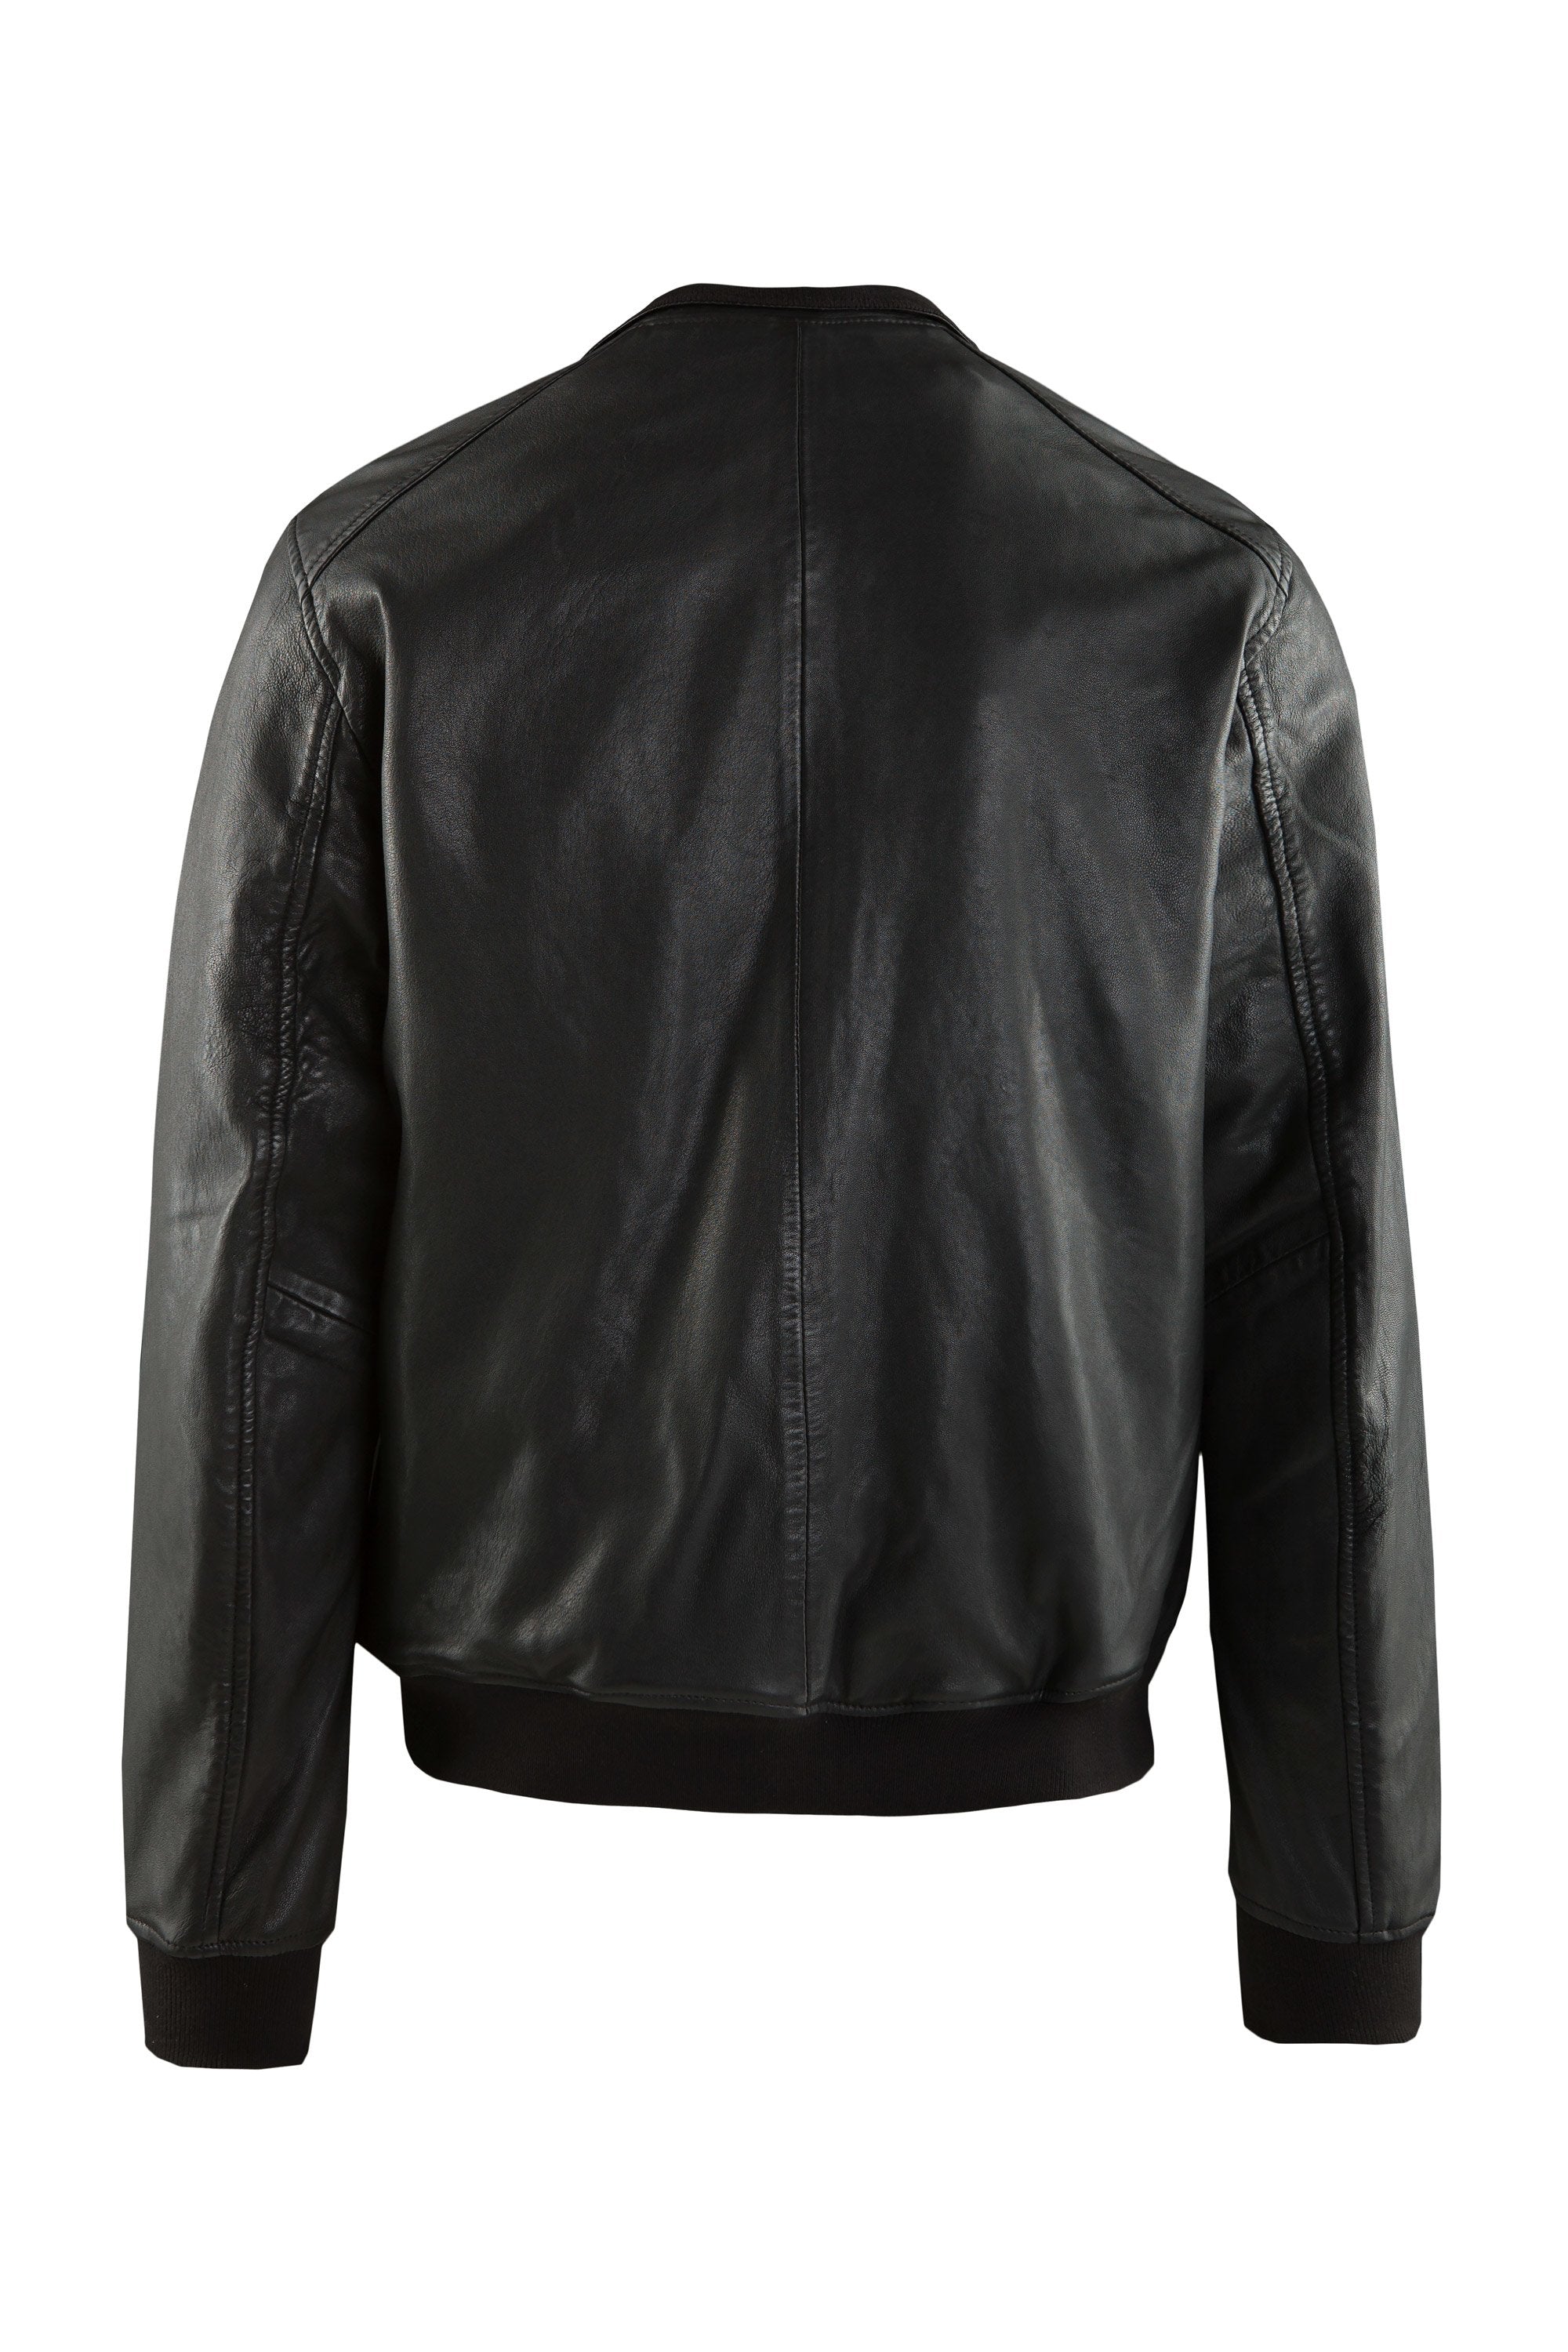 Bomboogie JM FRIZ P LGW 90 black leather bomber jacket